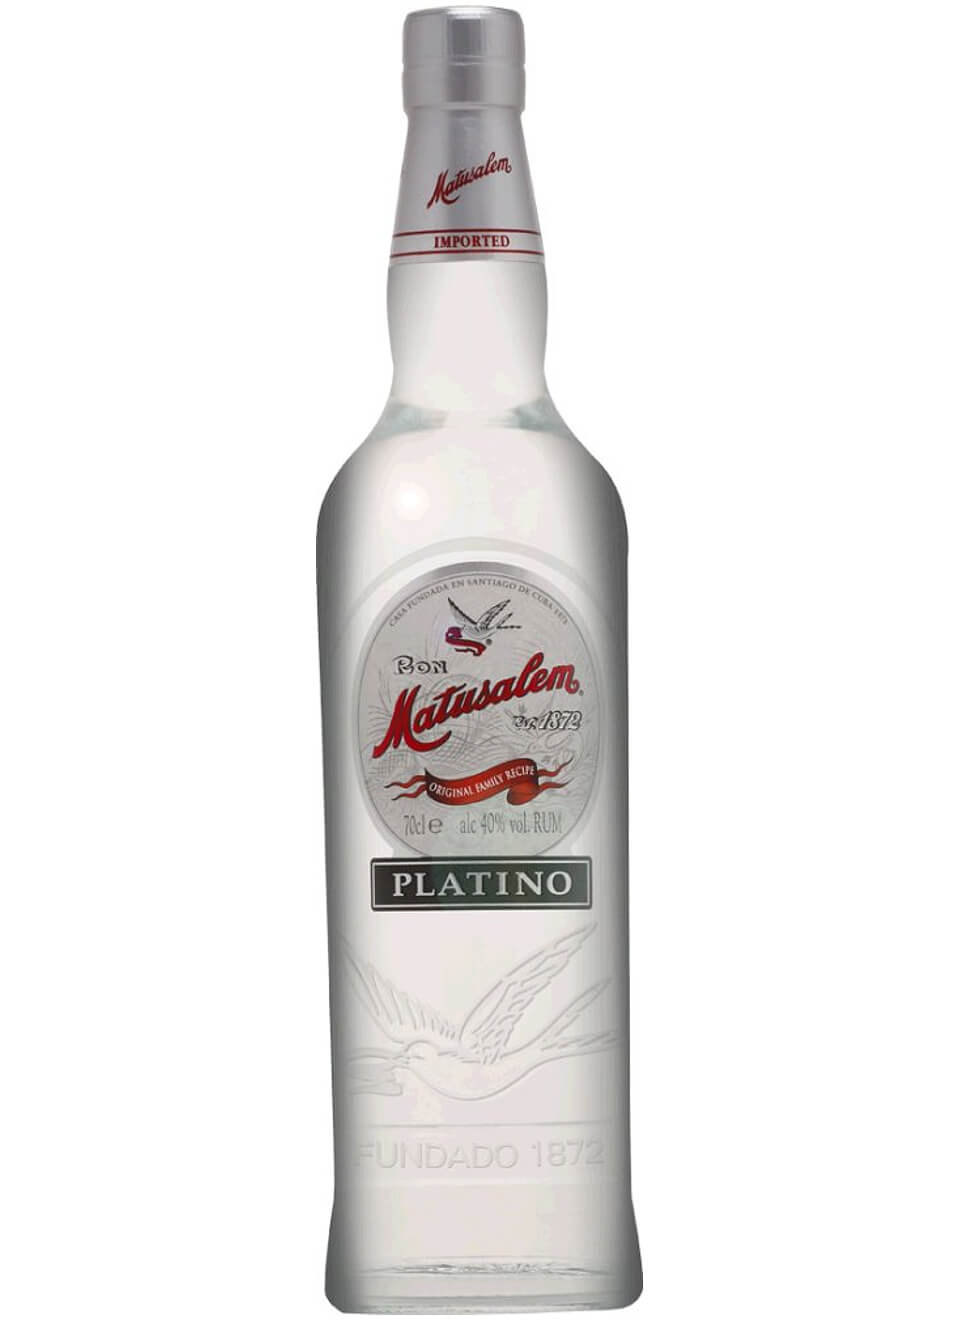 Ron Matusalem Platino Rum 0,7 L